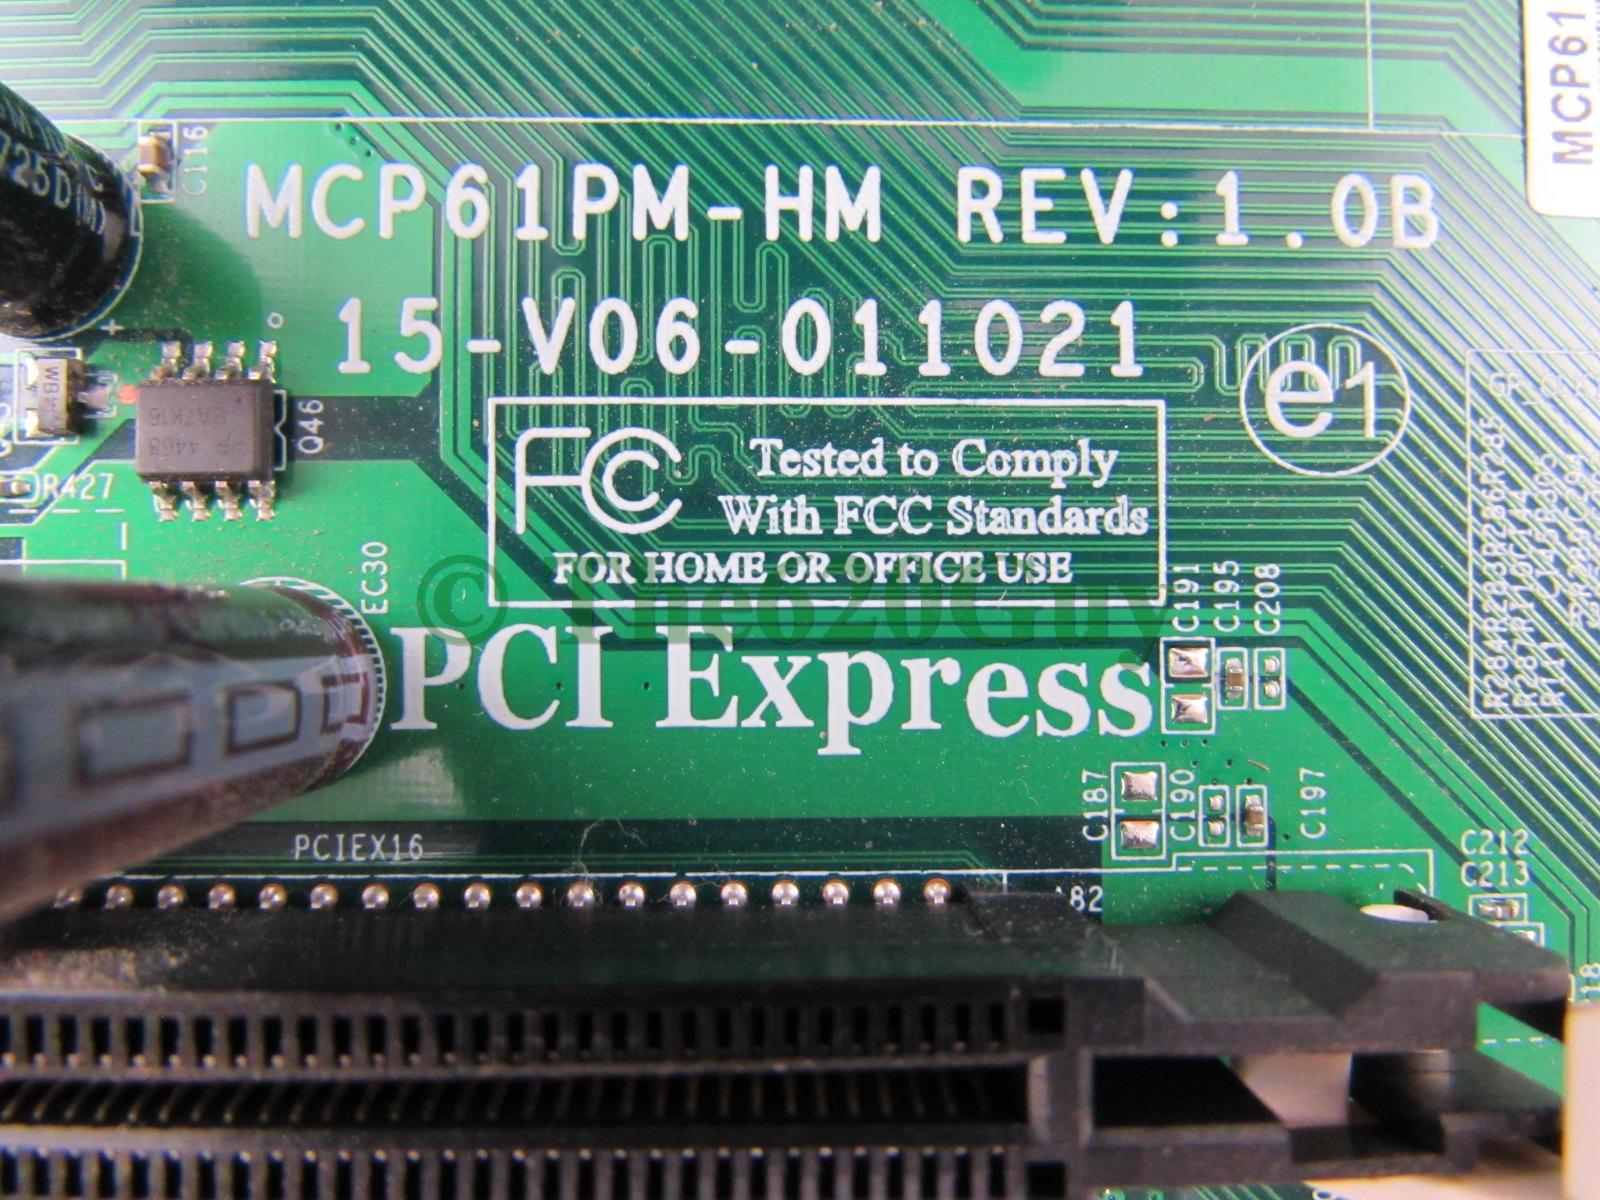 ecs mcp61pm hm motherboard manual